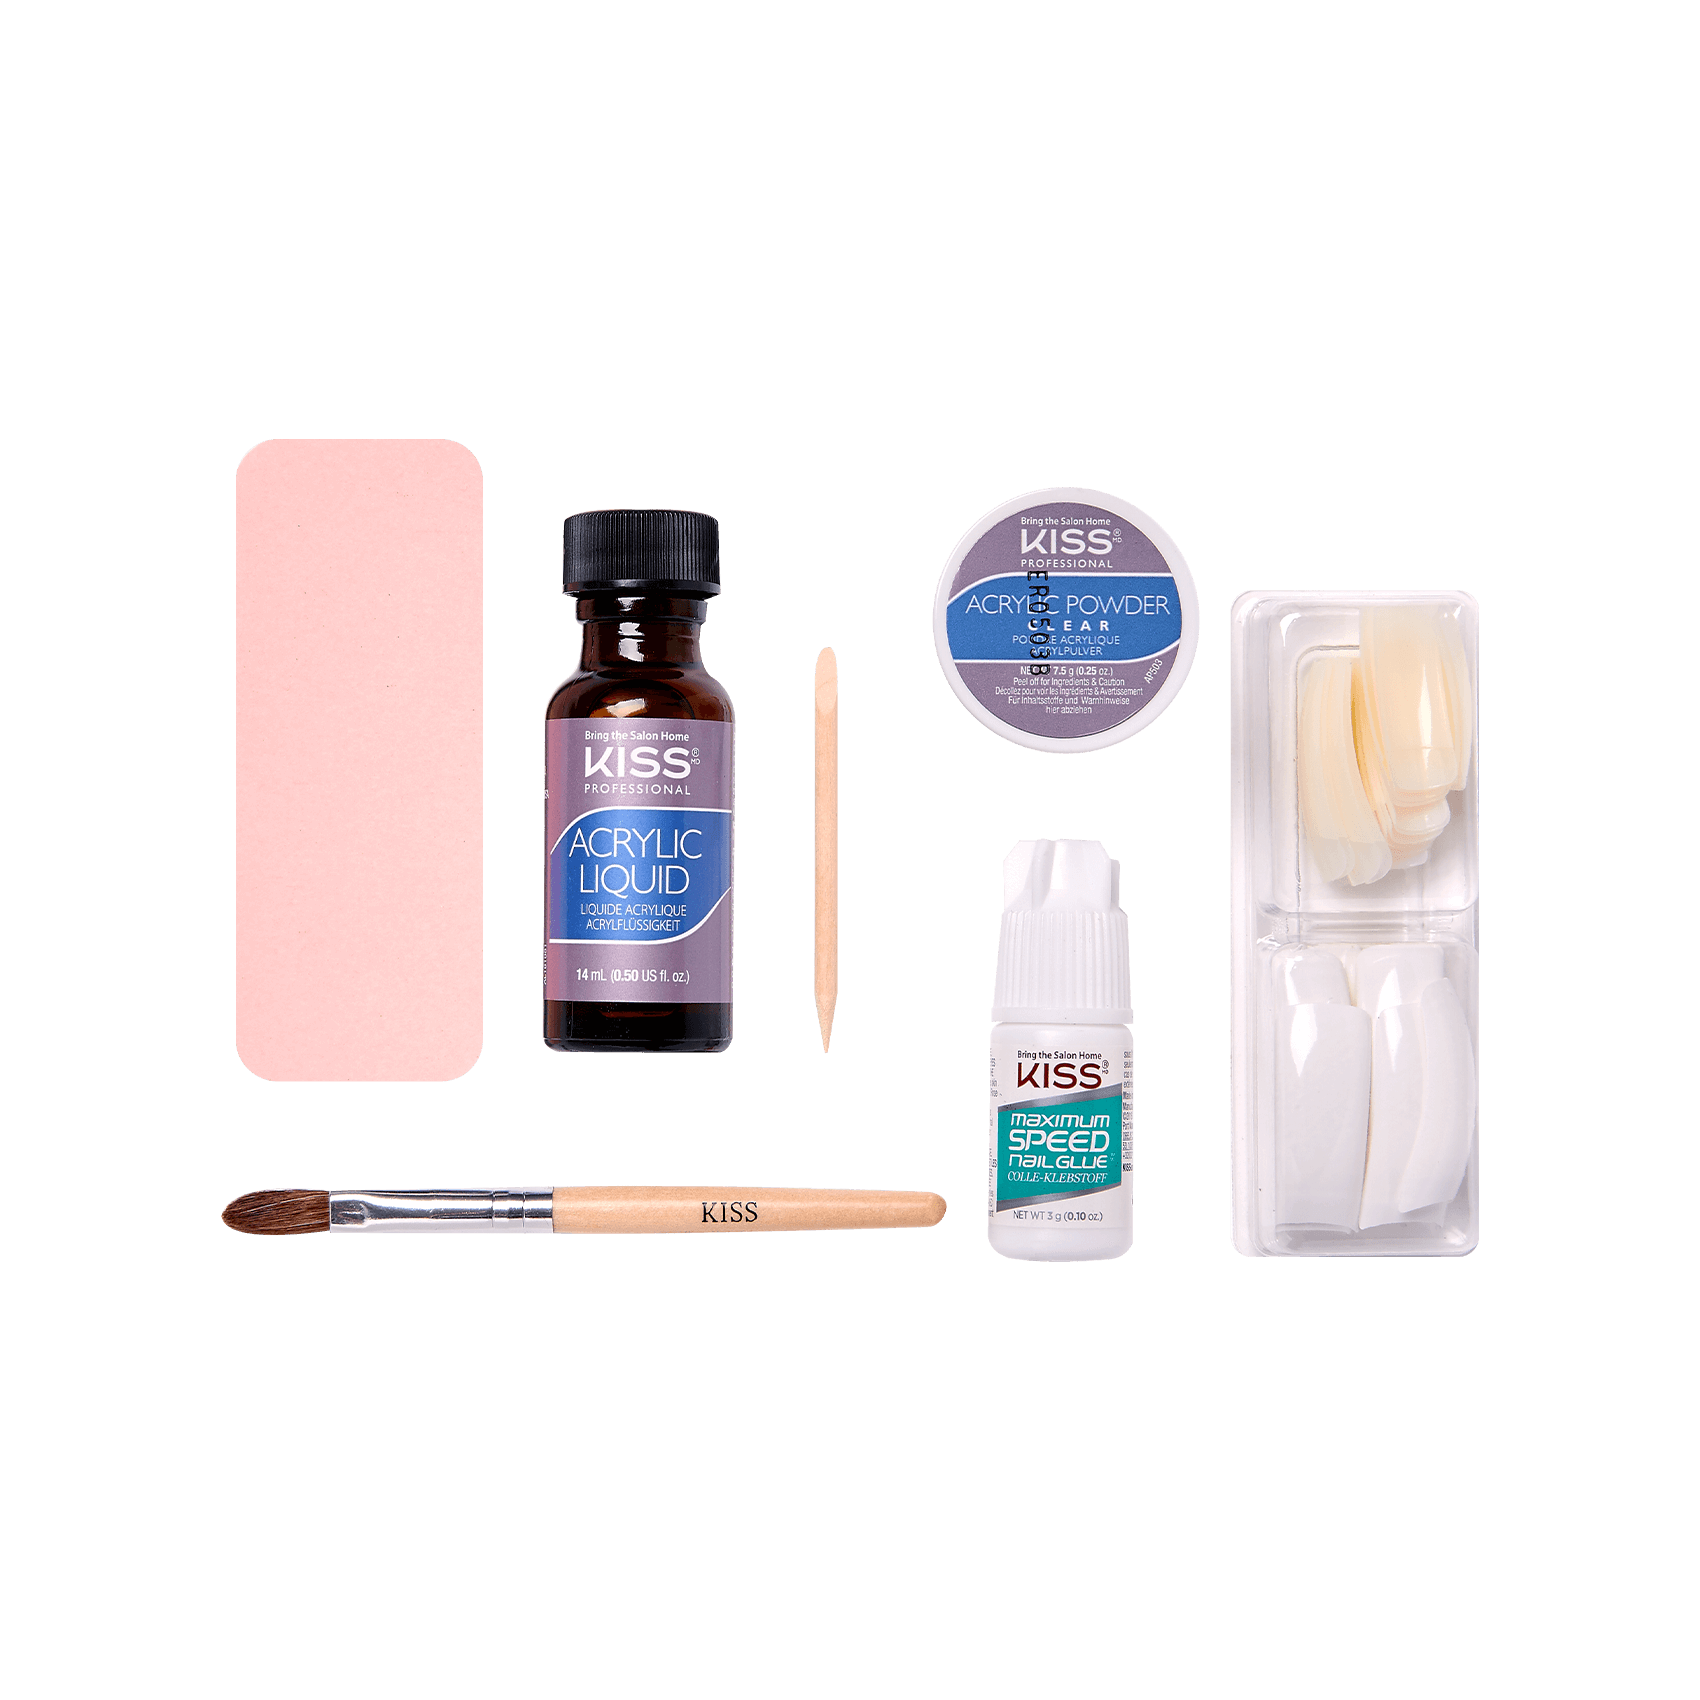 DIY Testing Dip Powder Nail Kit from Walmart - DipWell Nails - YouTube